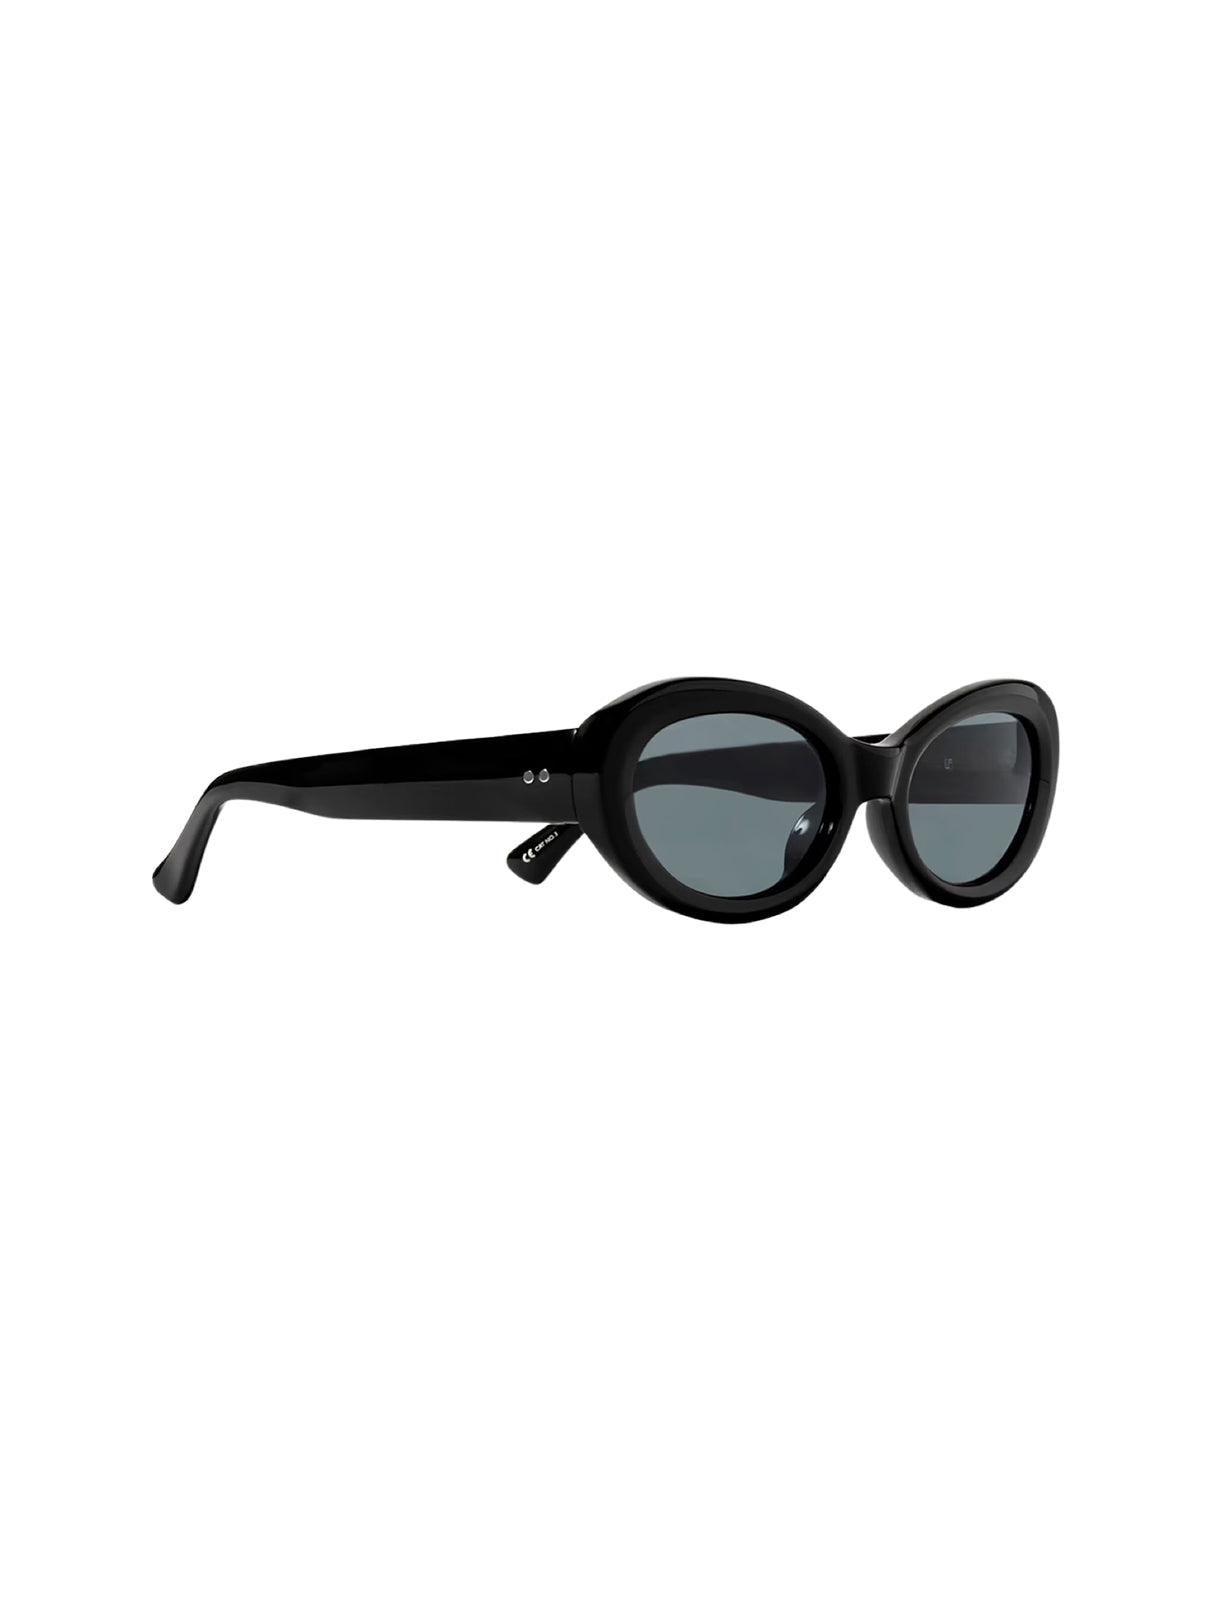 DVN x LF Oval Frame 211 Sunglasses